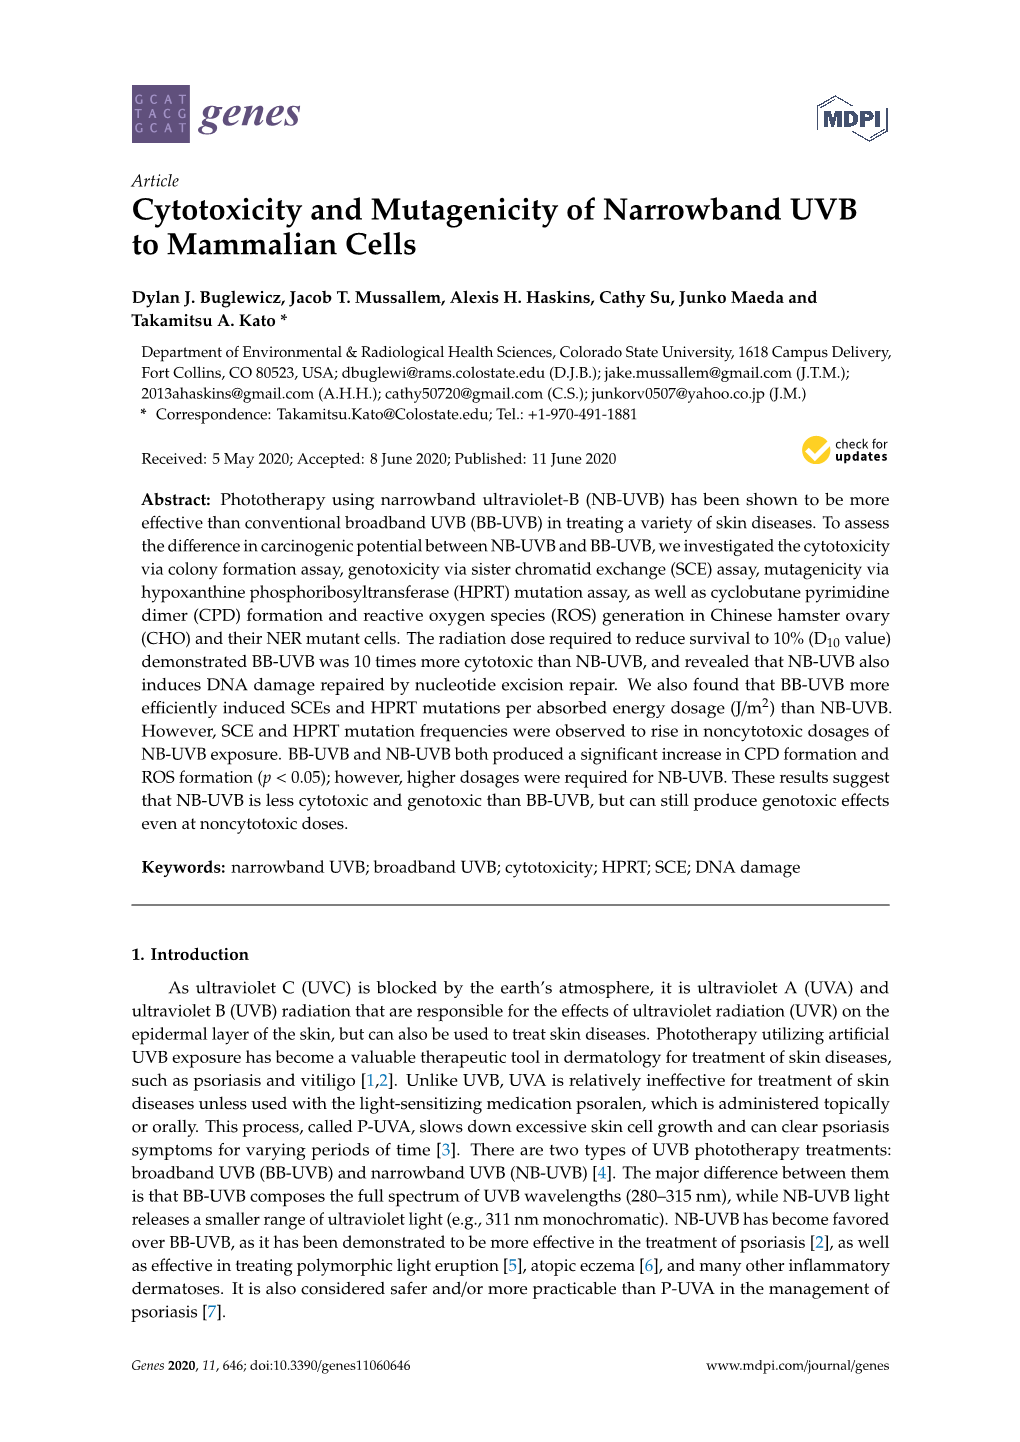 Cytotoxicity and Mutagenicity of Narrowband UVB to Mammalian Cells